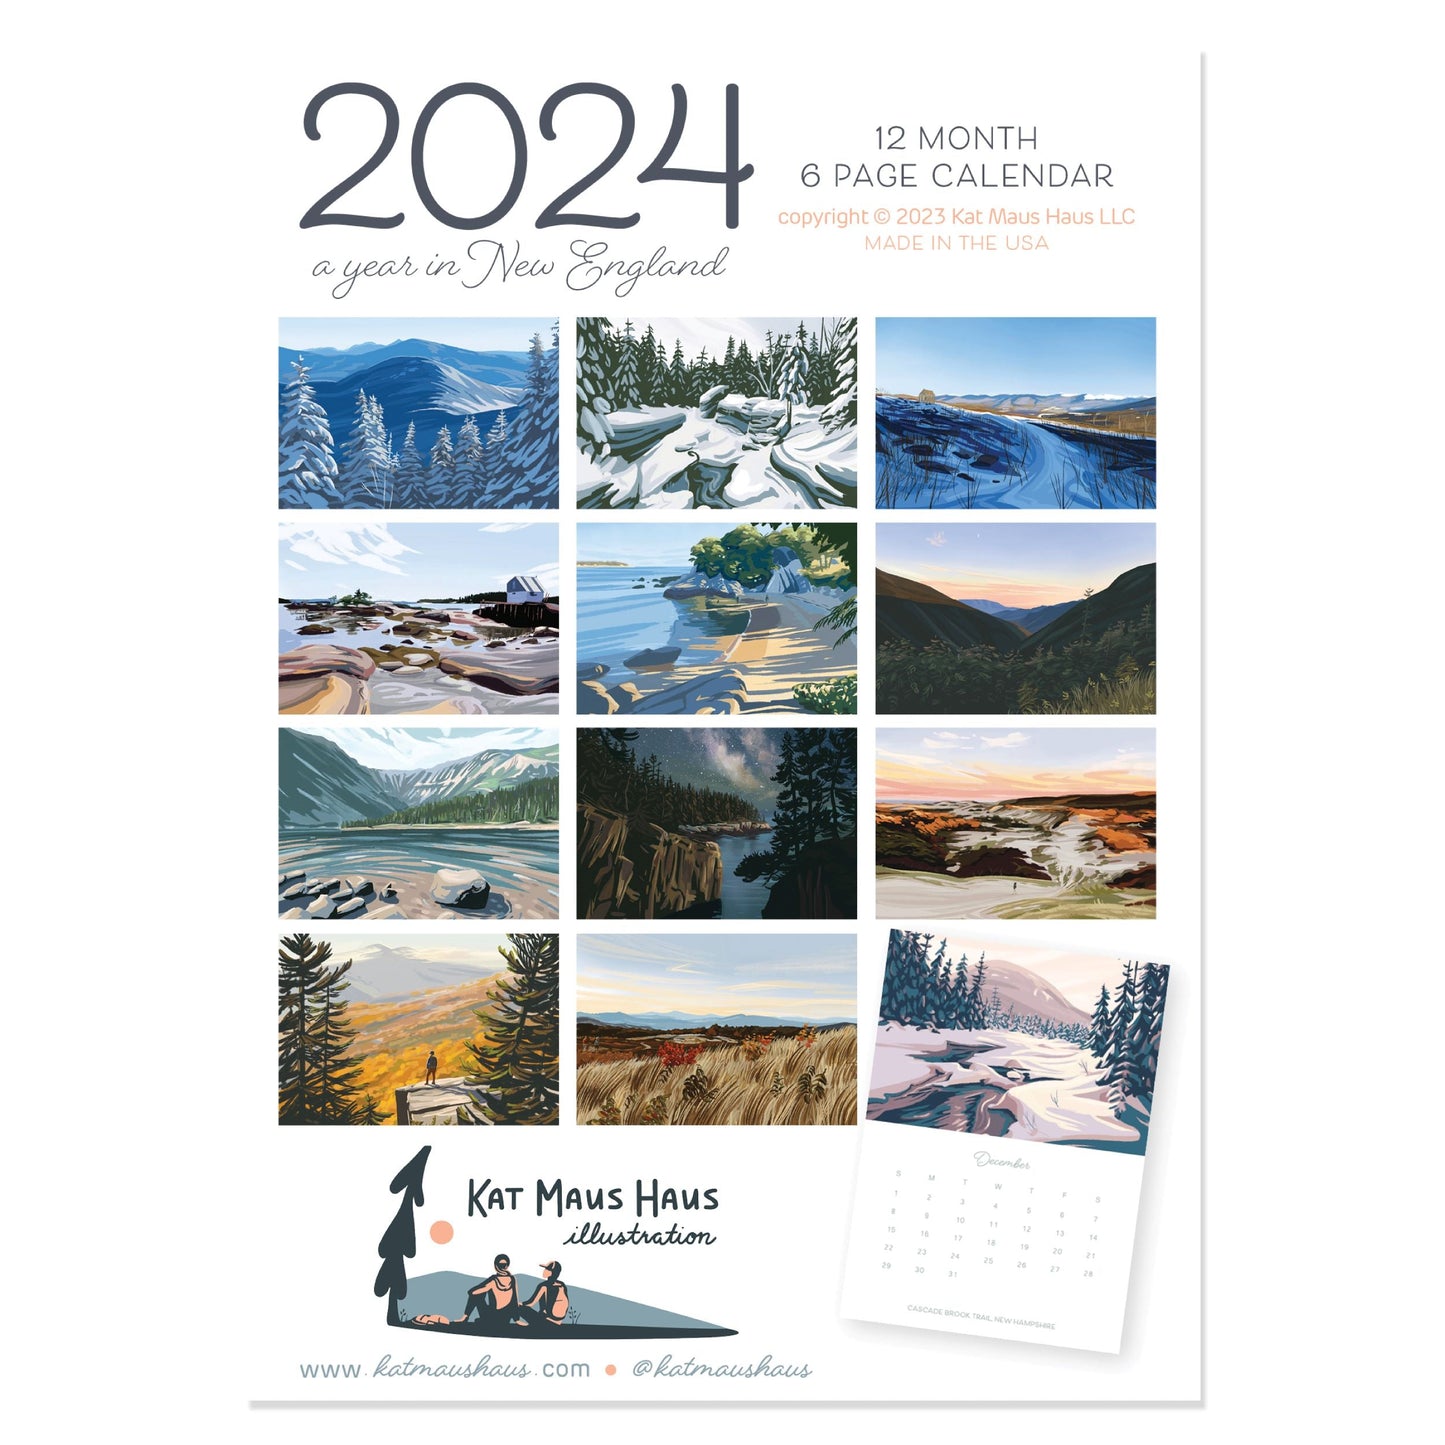 2024 Desk Calendar, "A Year in New England"